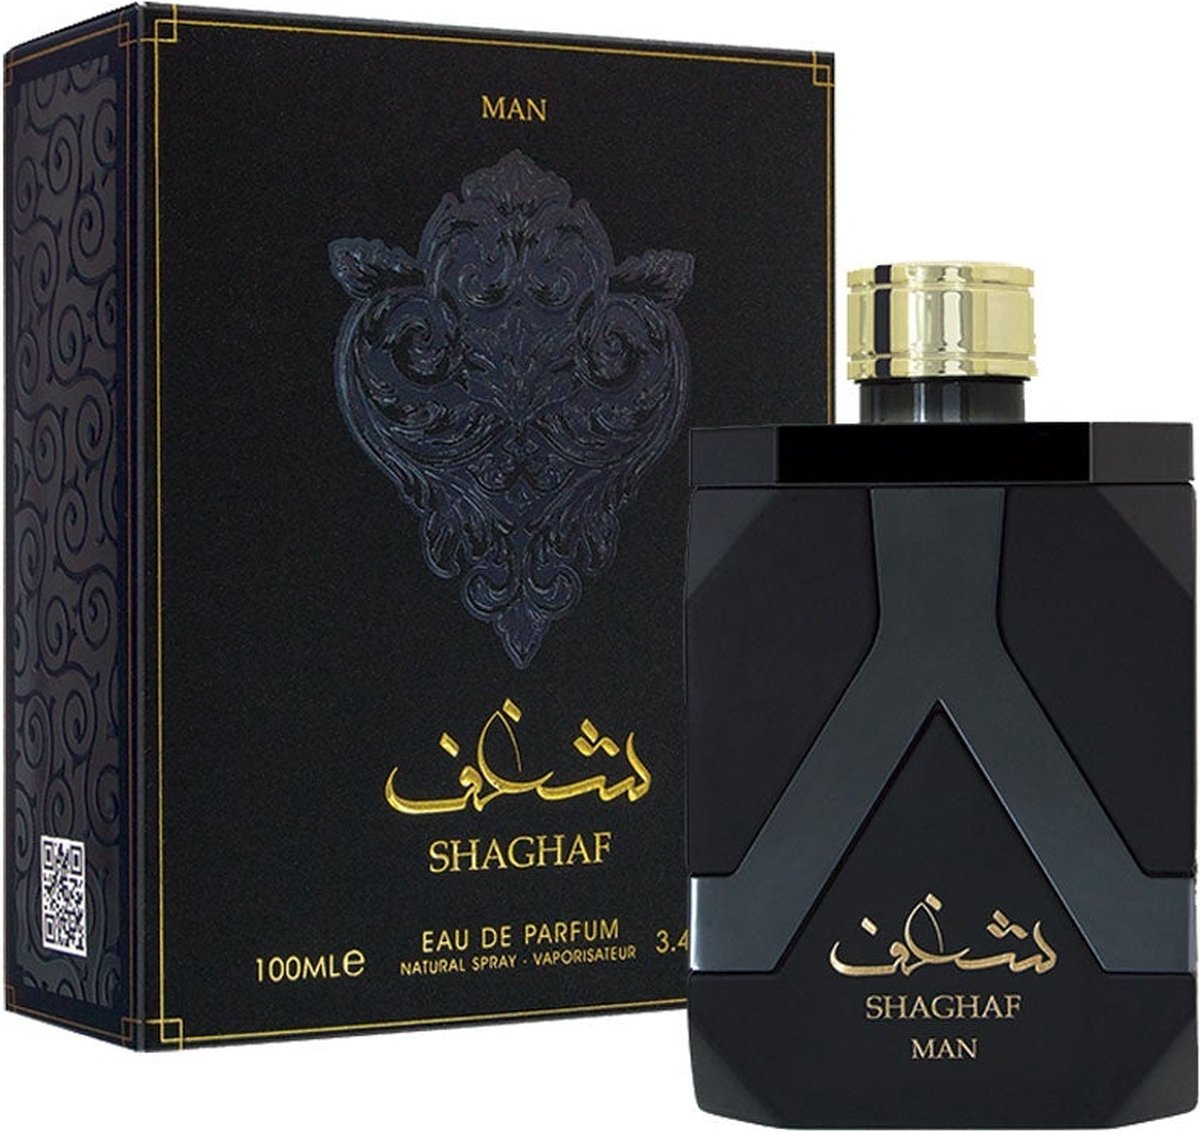 Shaghaf Man Eau de Parfum